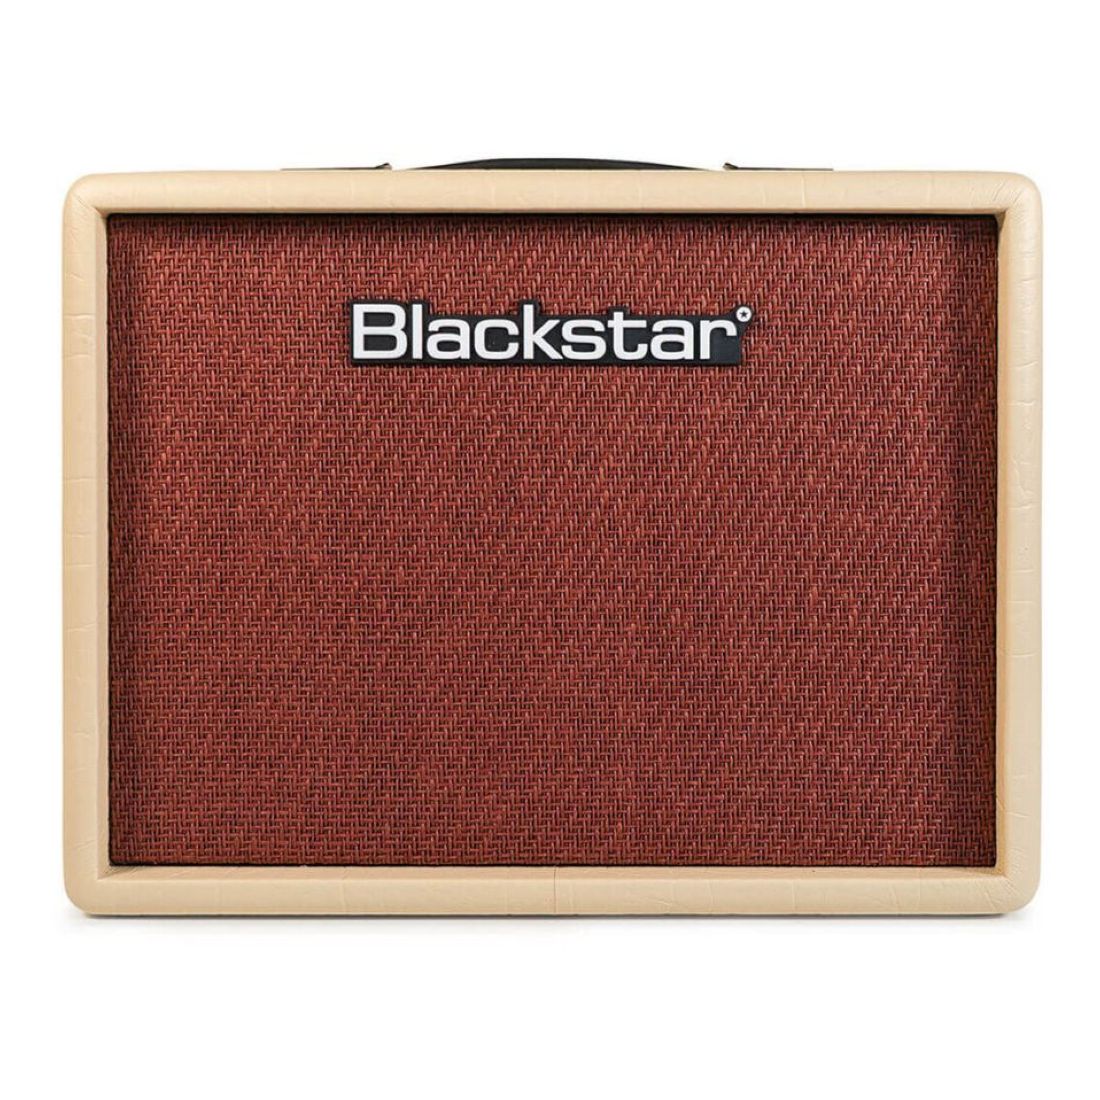 Blackstar Debut-15E Stereo 15W Practice Guitar Amplifier - Beige